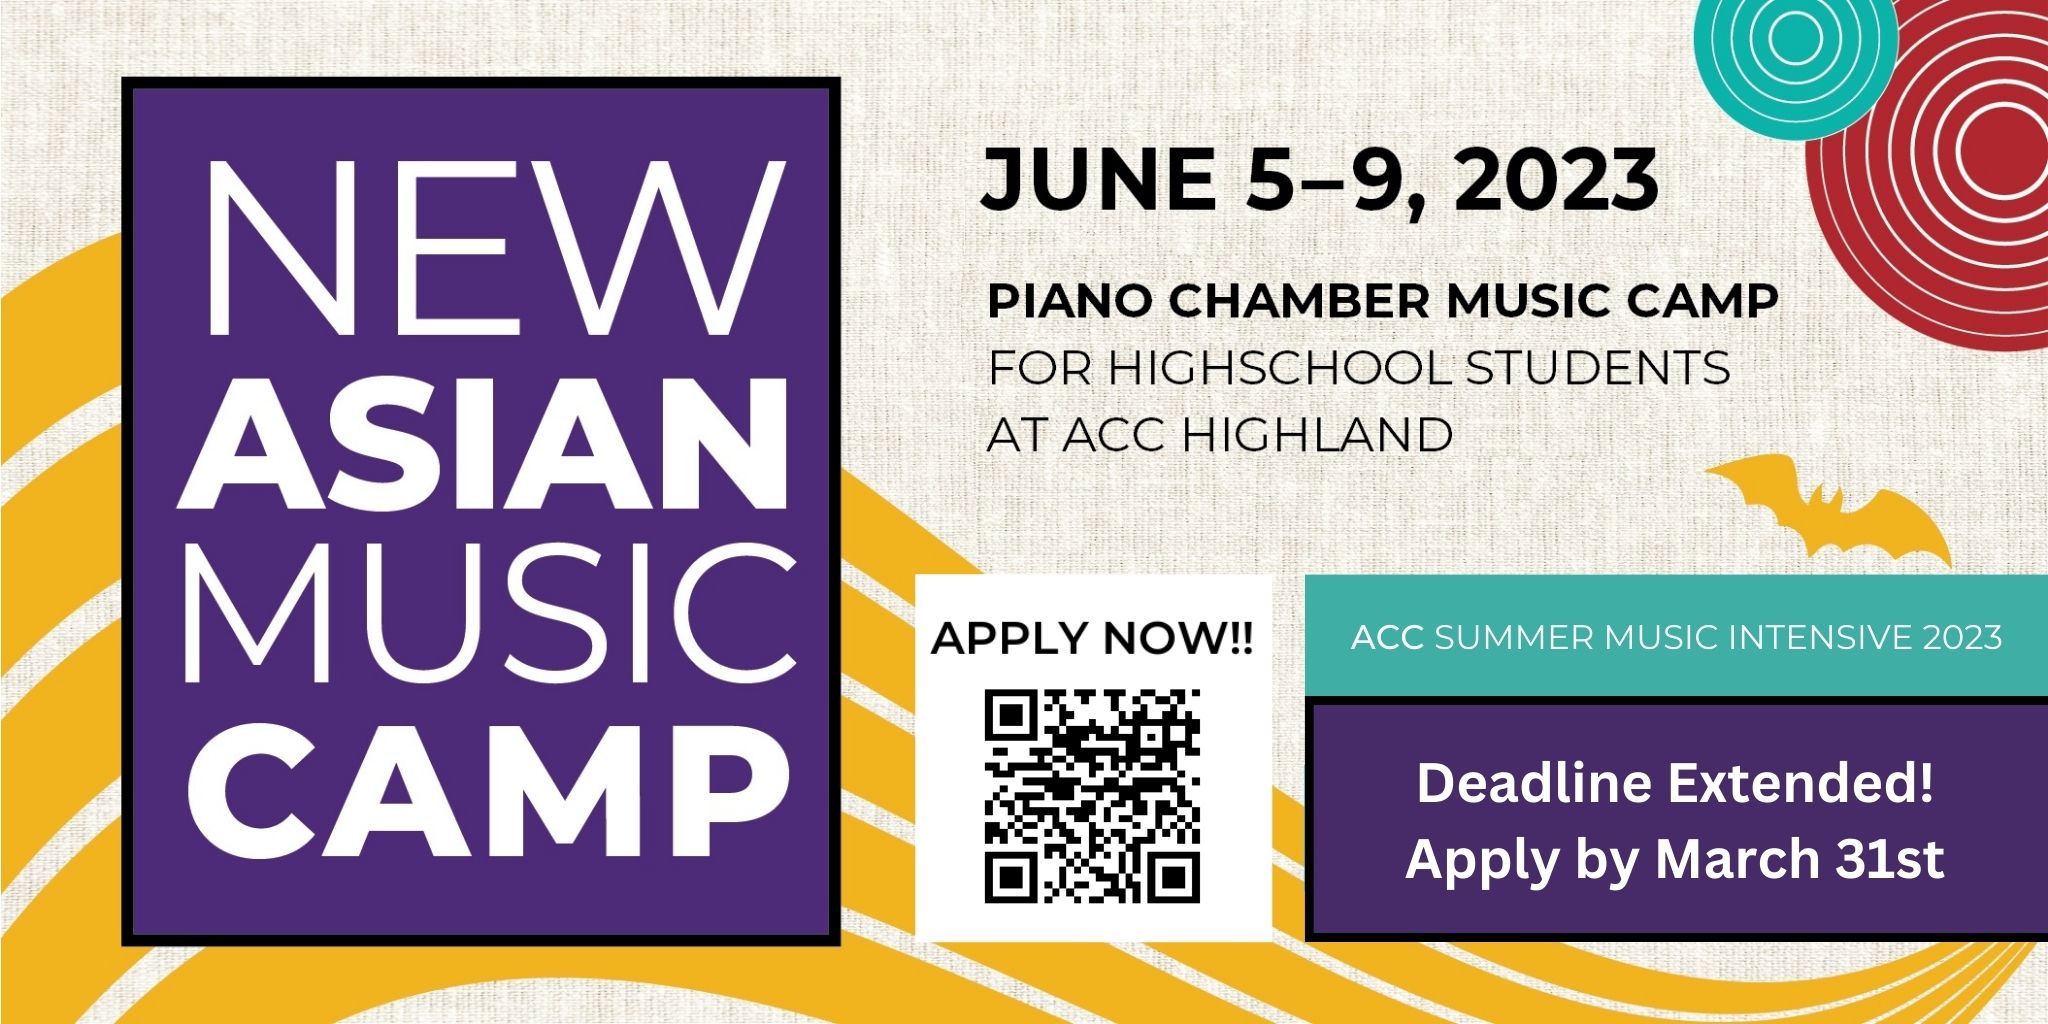 New Asian Music Camp June 5-6